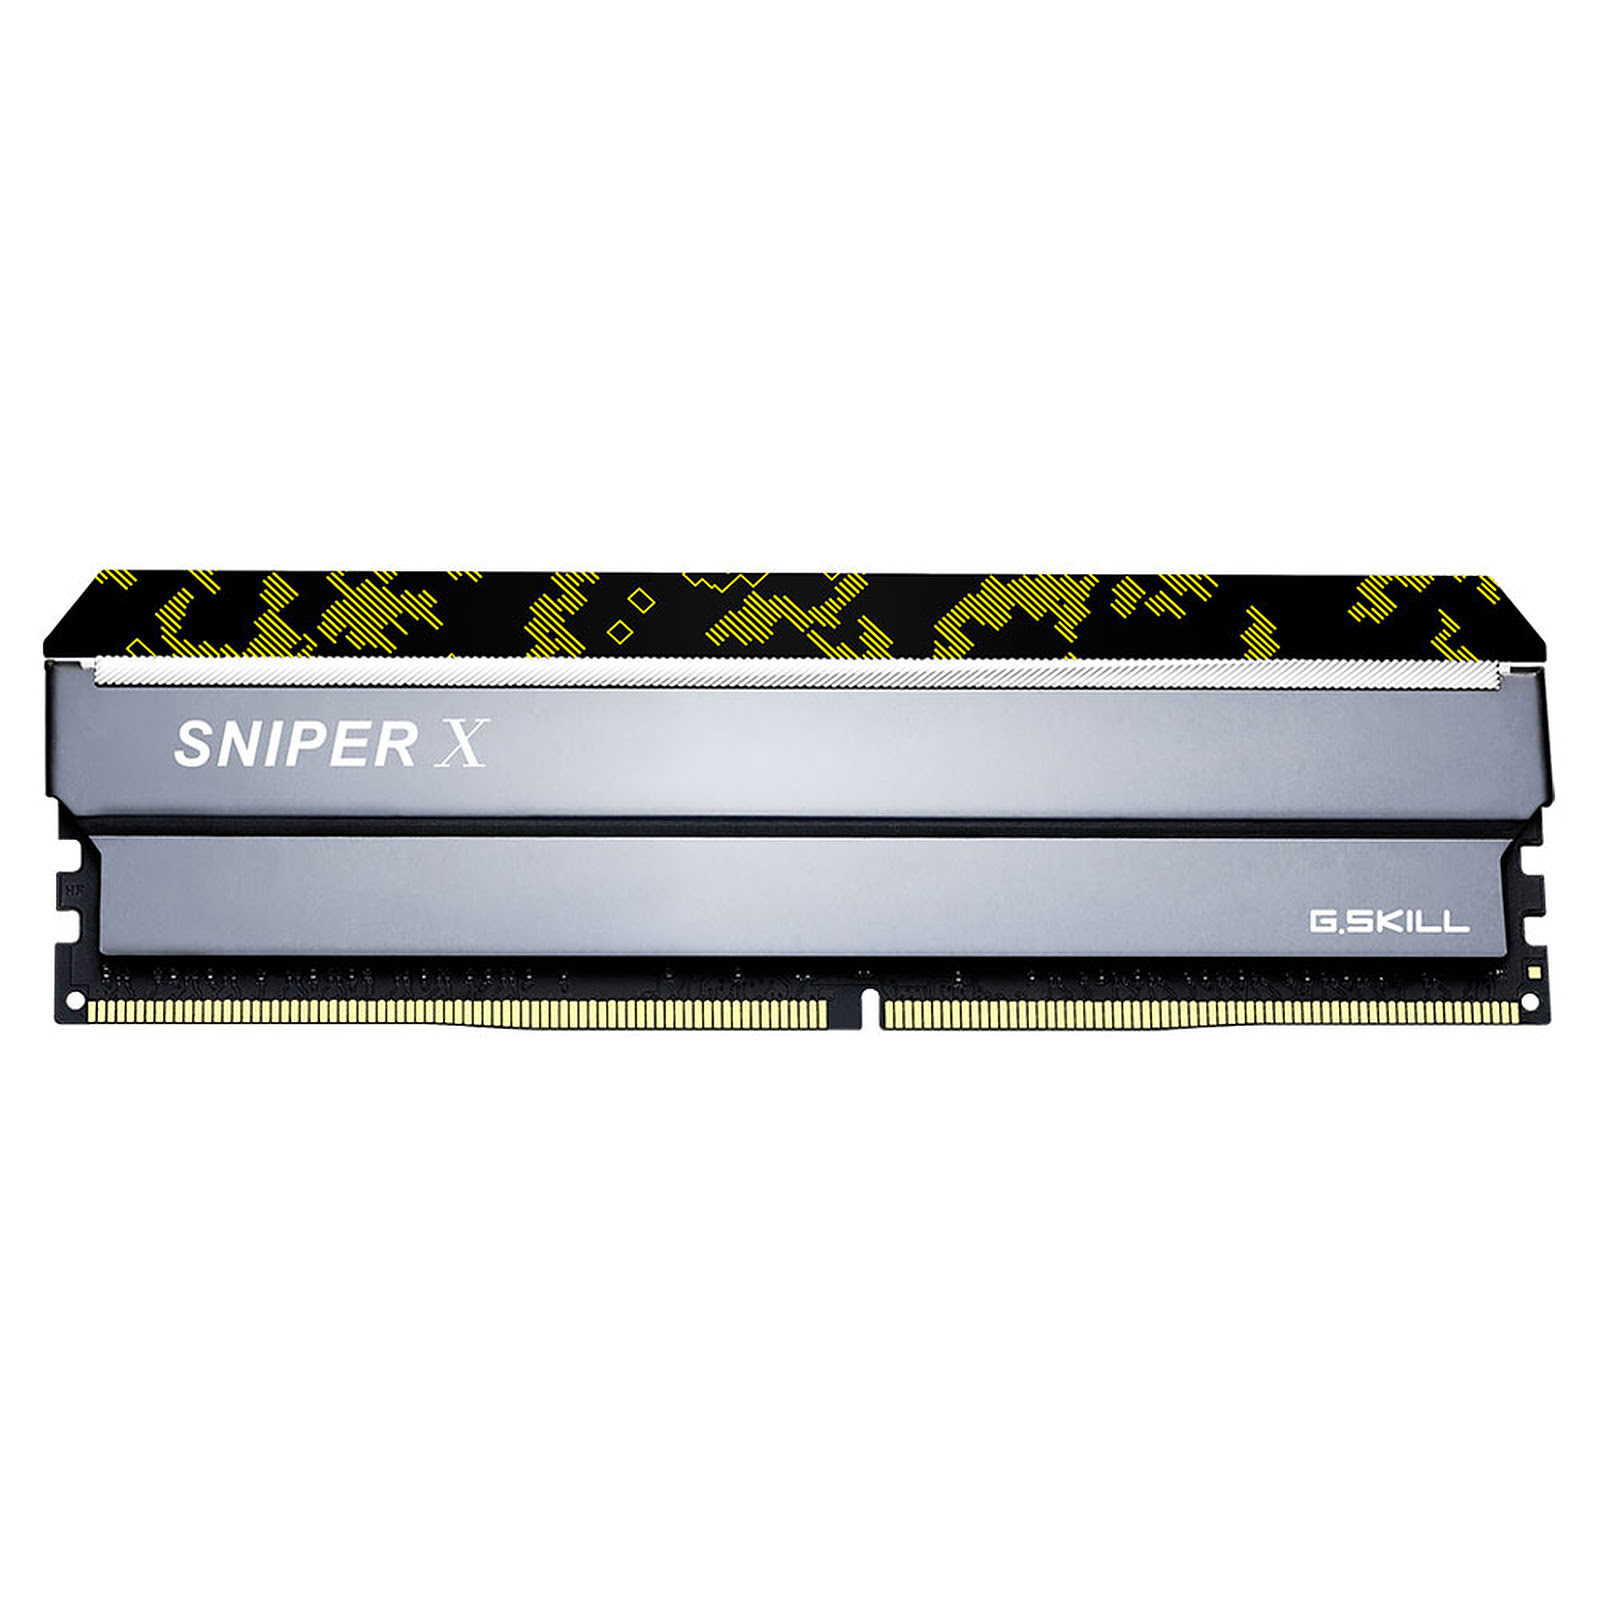 G.Skill Sniper X 32Go (2x16Go) DDR4 3600MHz - Mémoire PC G.Skill sur grosbill-pro.com - 1